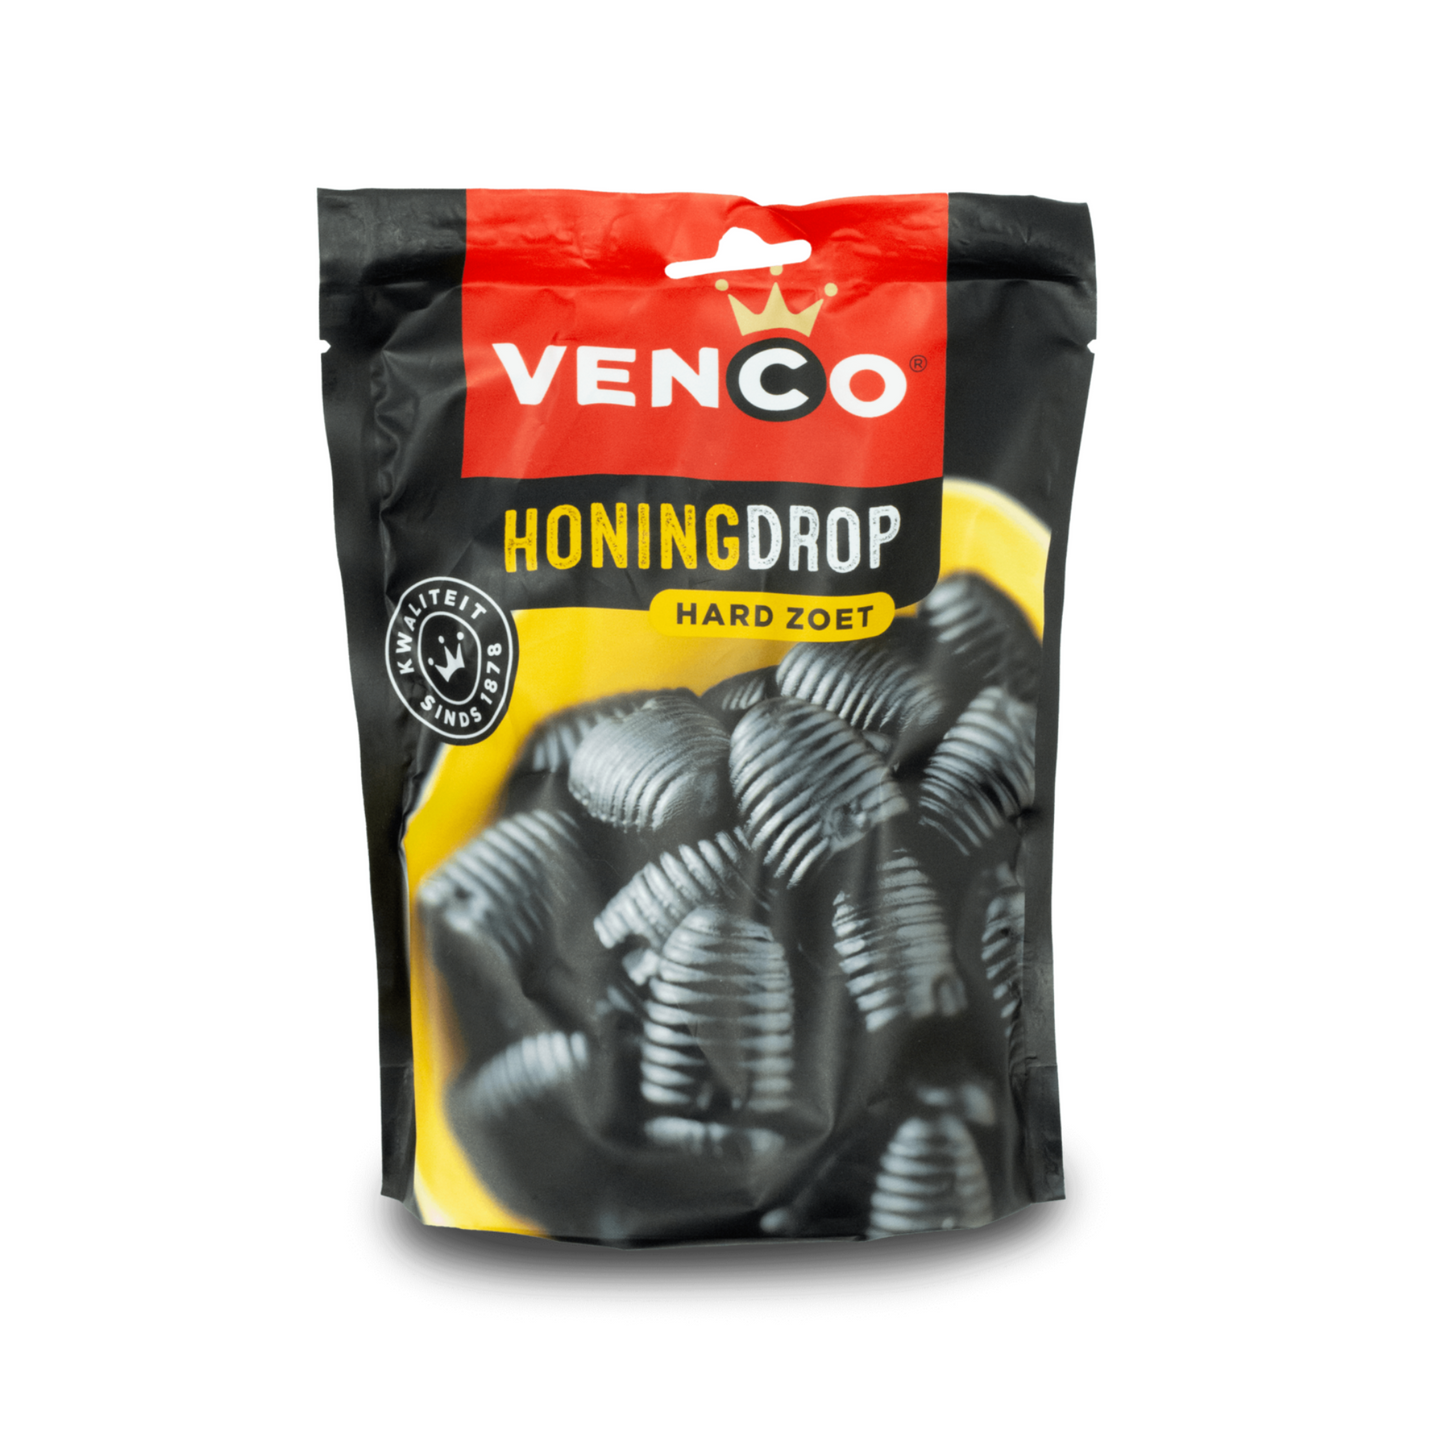 Primary Image of Honingdrop (Honey Drop) Licorice Hard Zoet